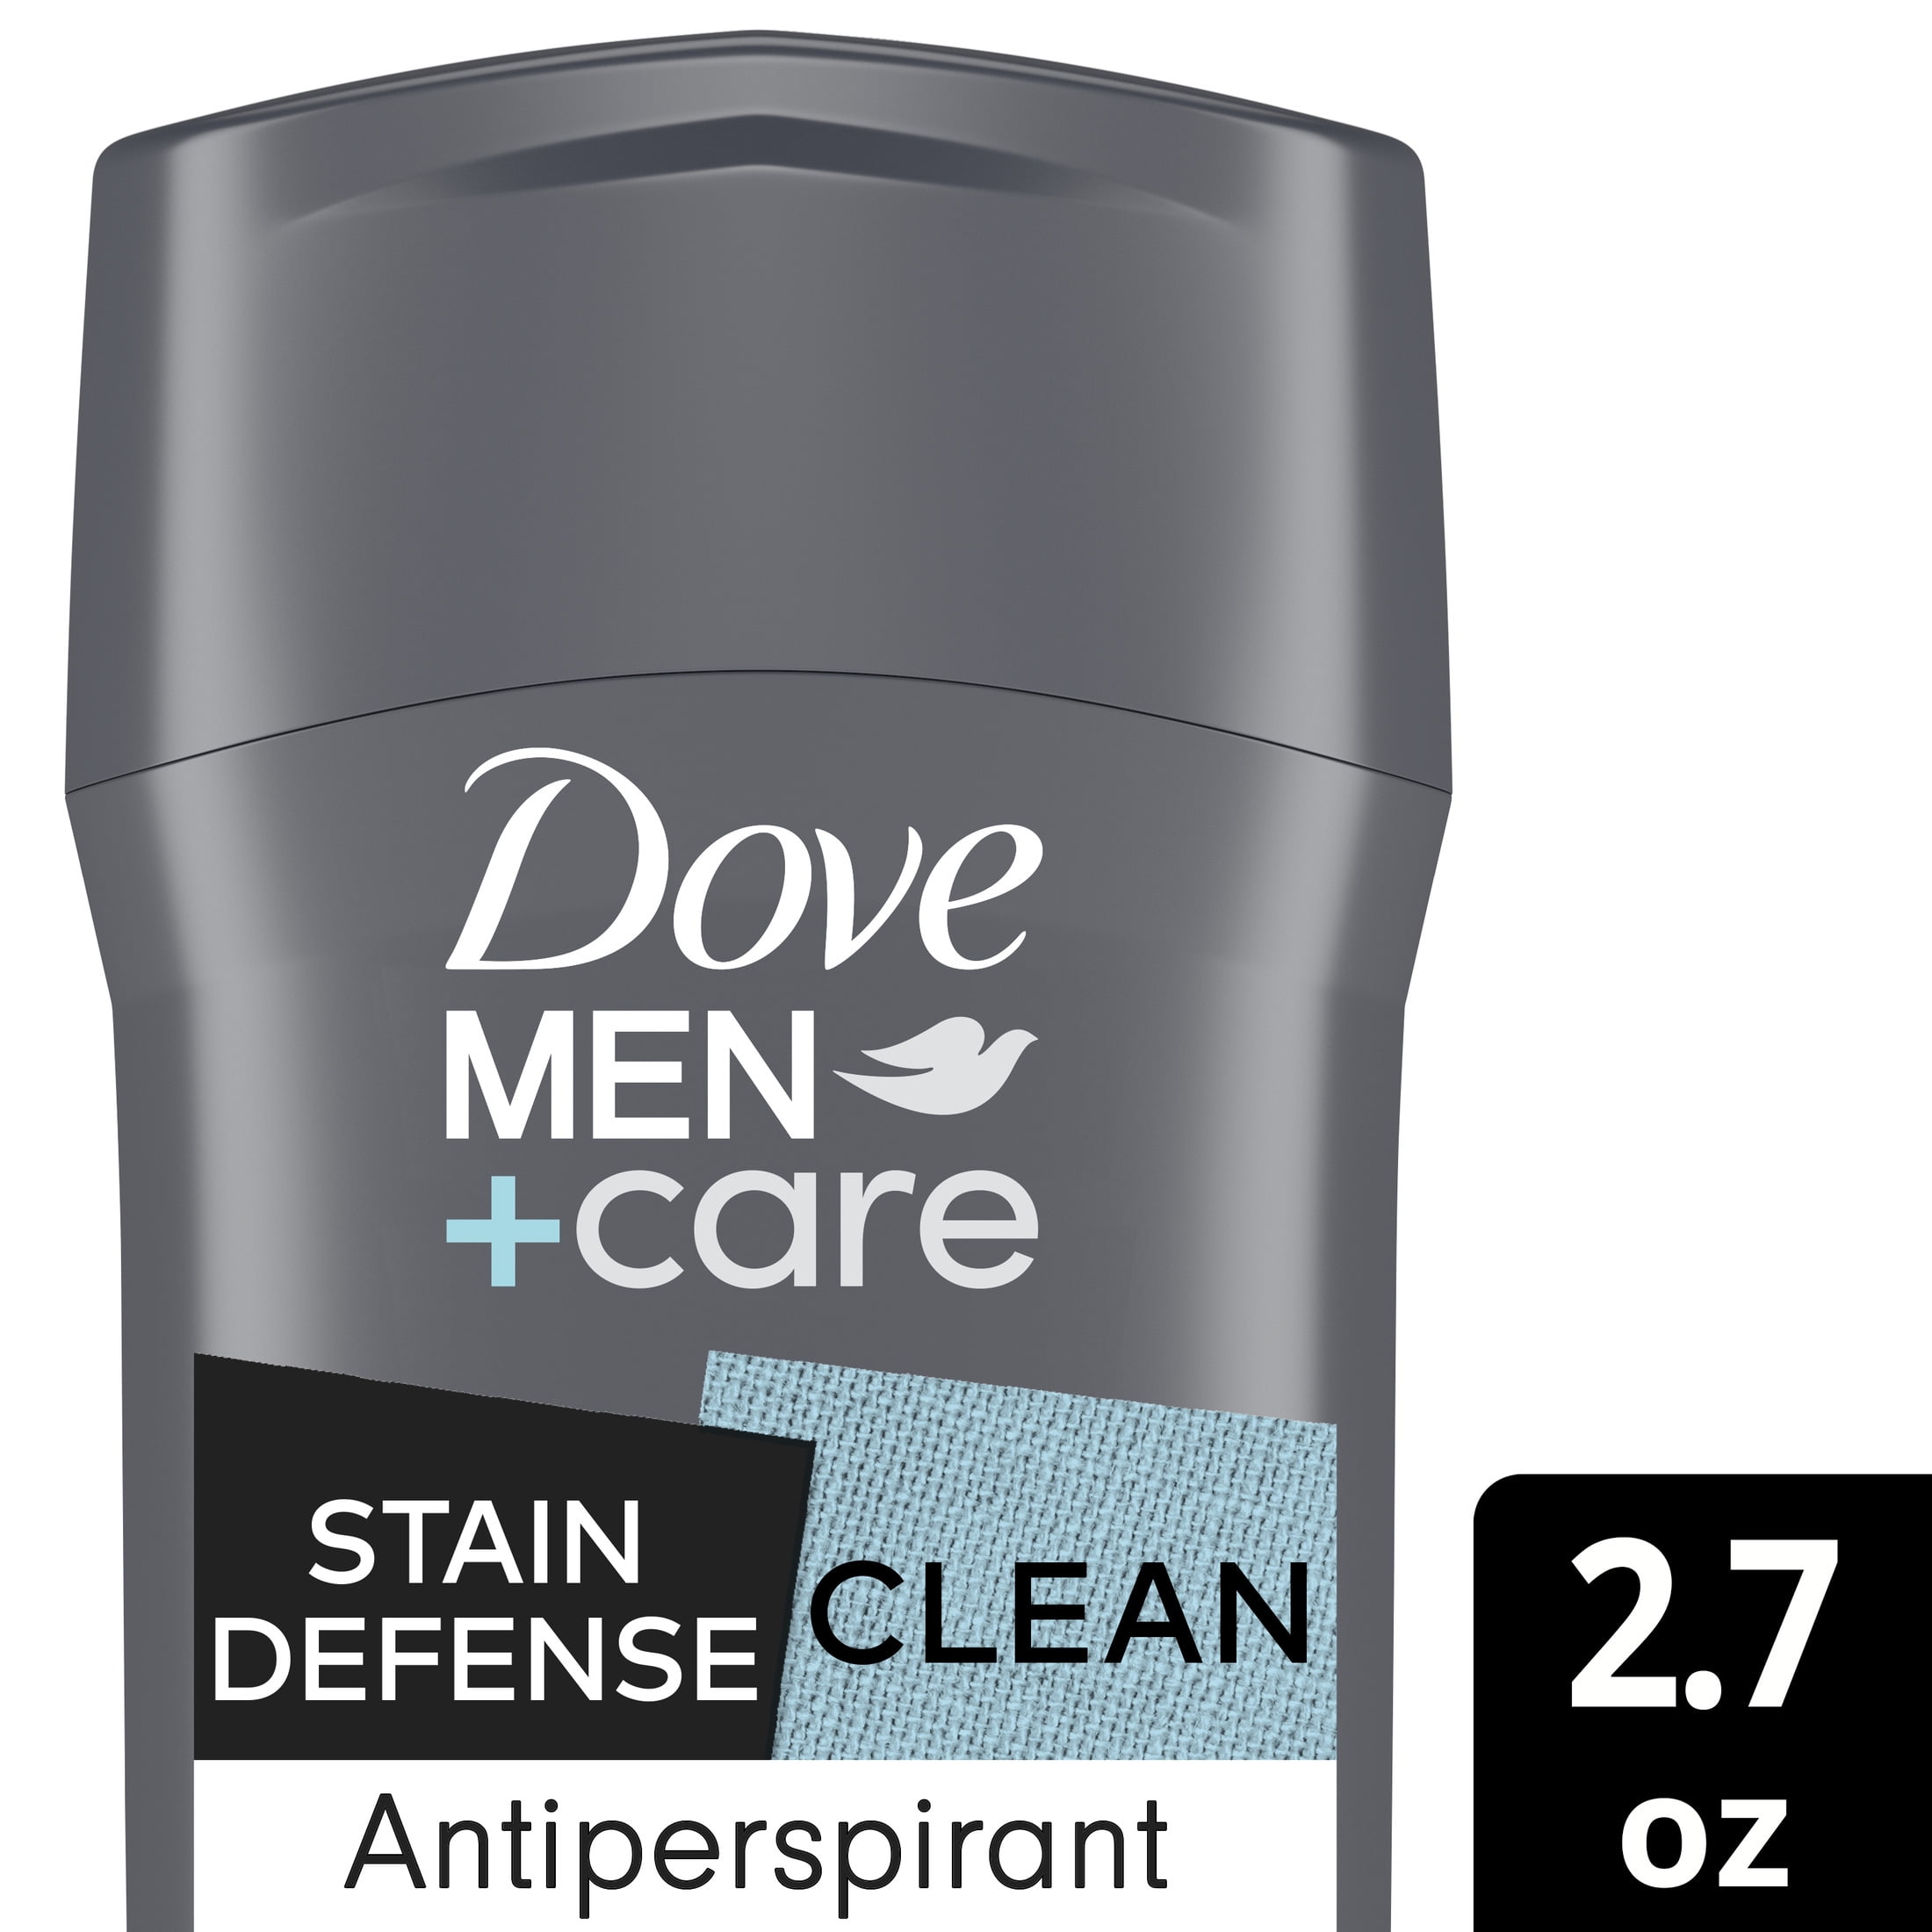 Dove Men+Care Stain Defense Antiperspirant Deodorant Clean, 2.7 - Walmart.com